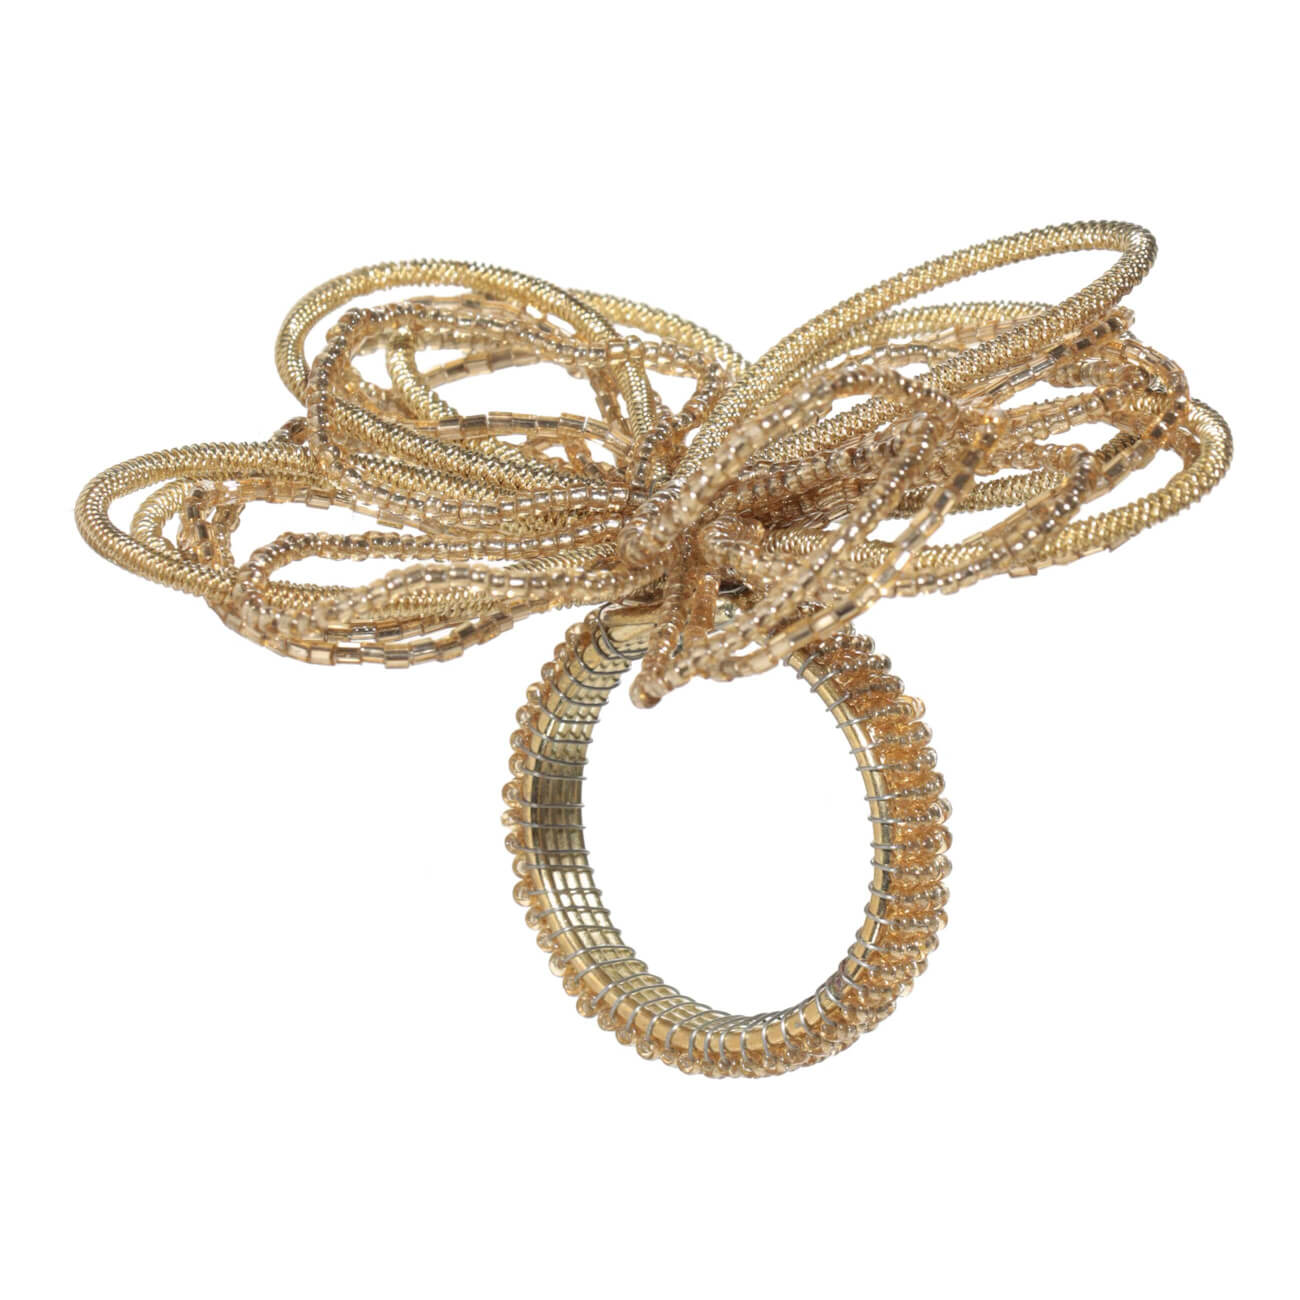 Кольцо для салфеток, 5 см, бисер/металл, золотистое, Петли, Loops кольцо для салфеток 5 см 2 шт бисер круглое золотистое shiny beads